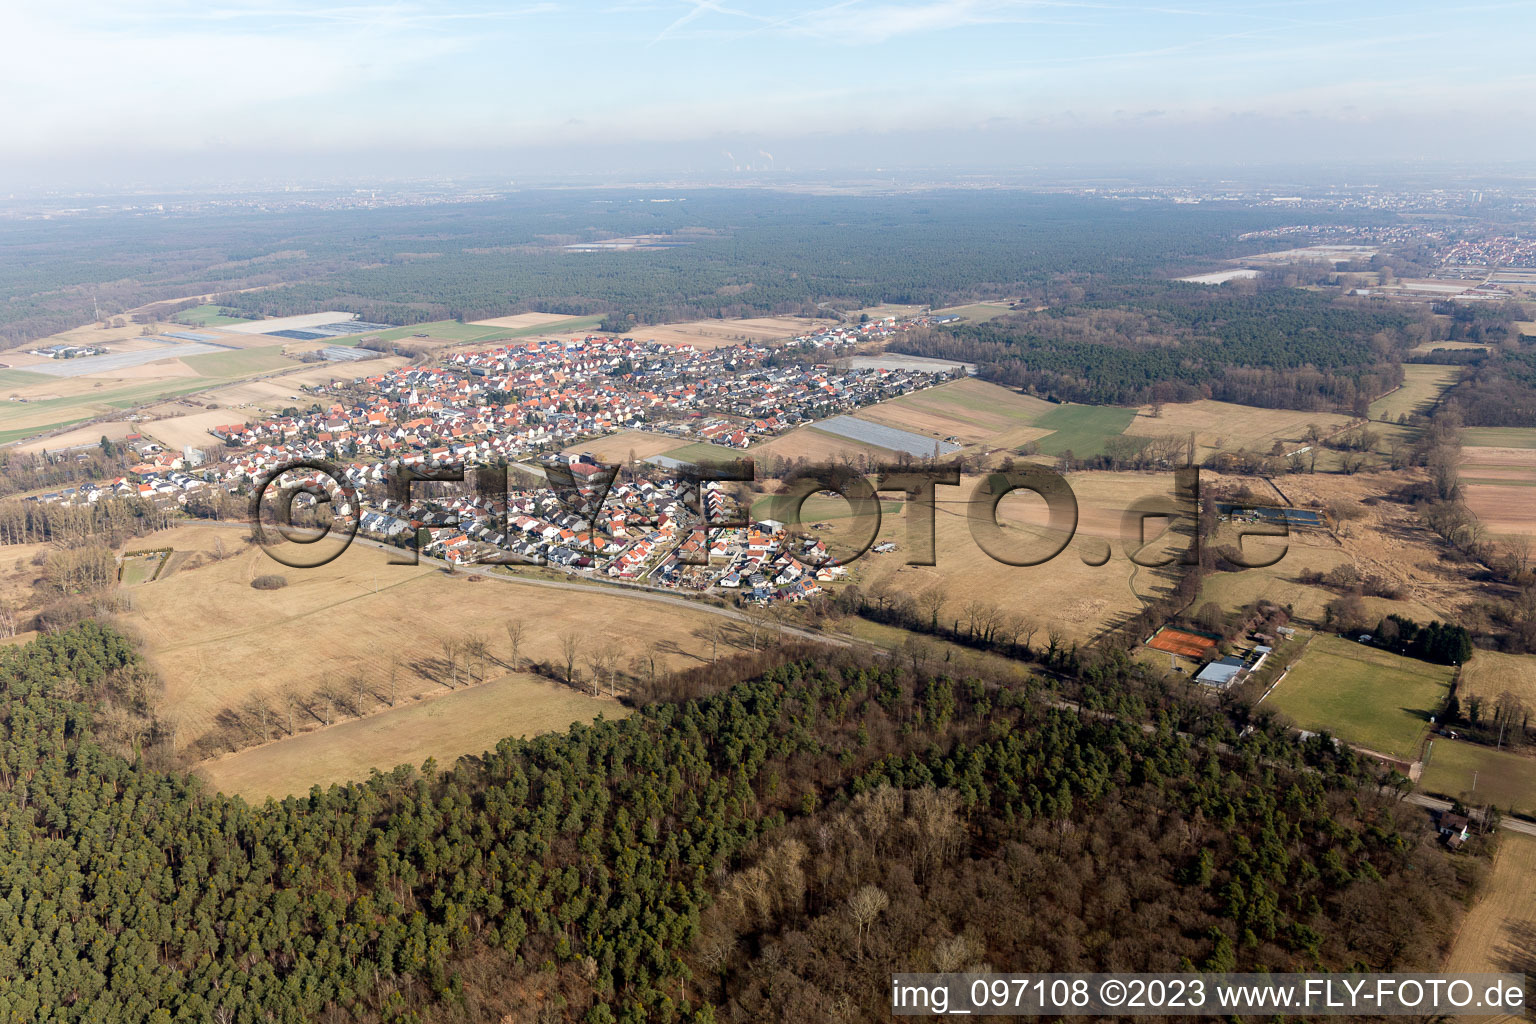 Bird's eye view of Hanhofen in the state Rhineland-Palatinate, Germany